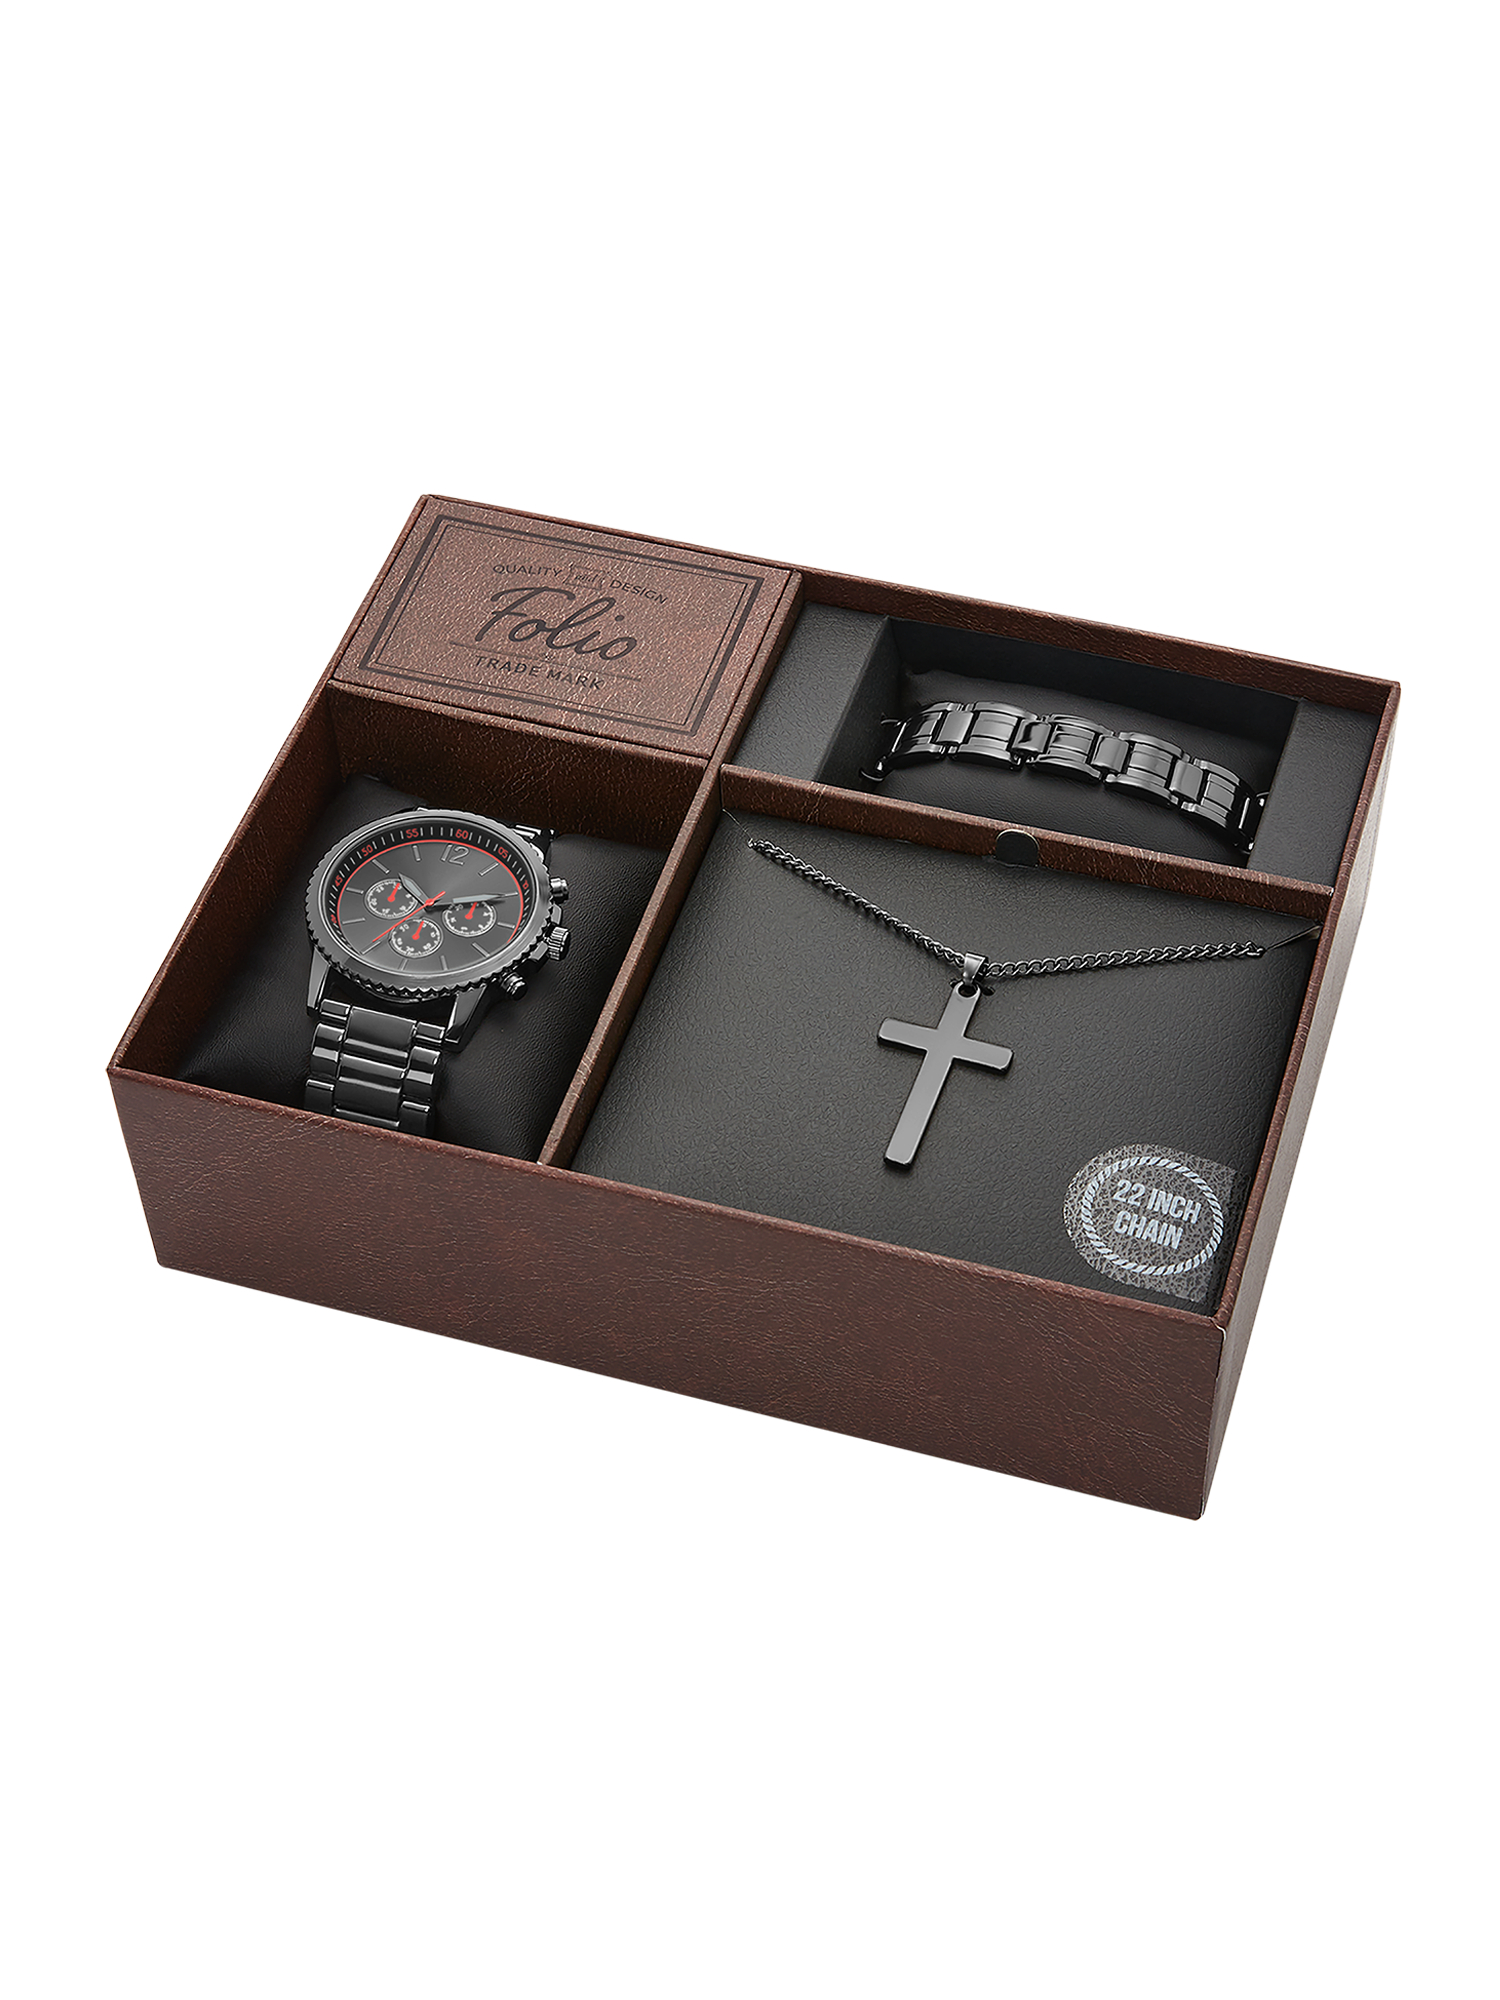 Folio Men's Gunmetal Tone Round Analog Bracelet Watch with Matching Bracelet and Cross Pendant Gift Set (FMDAL1148) - image 2 of 3